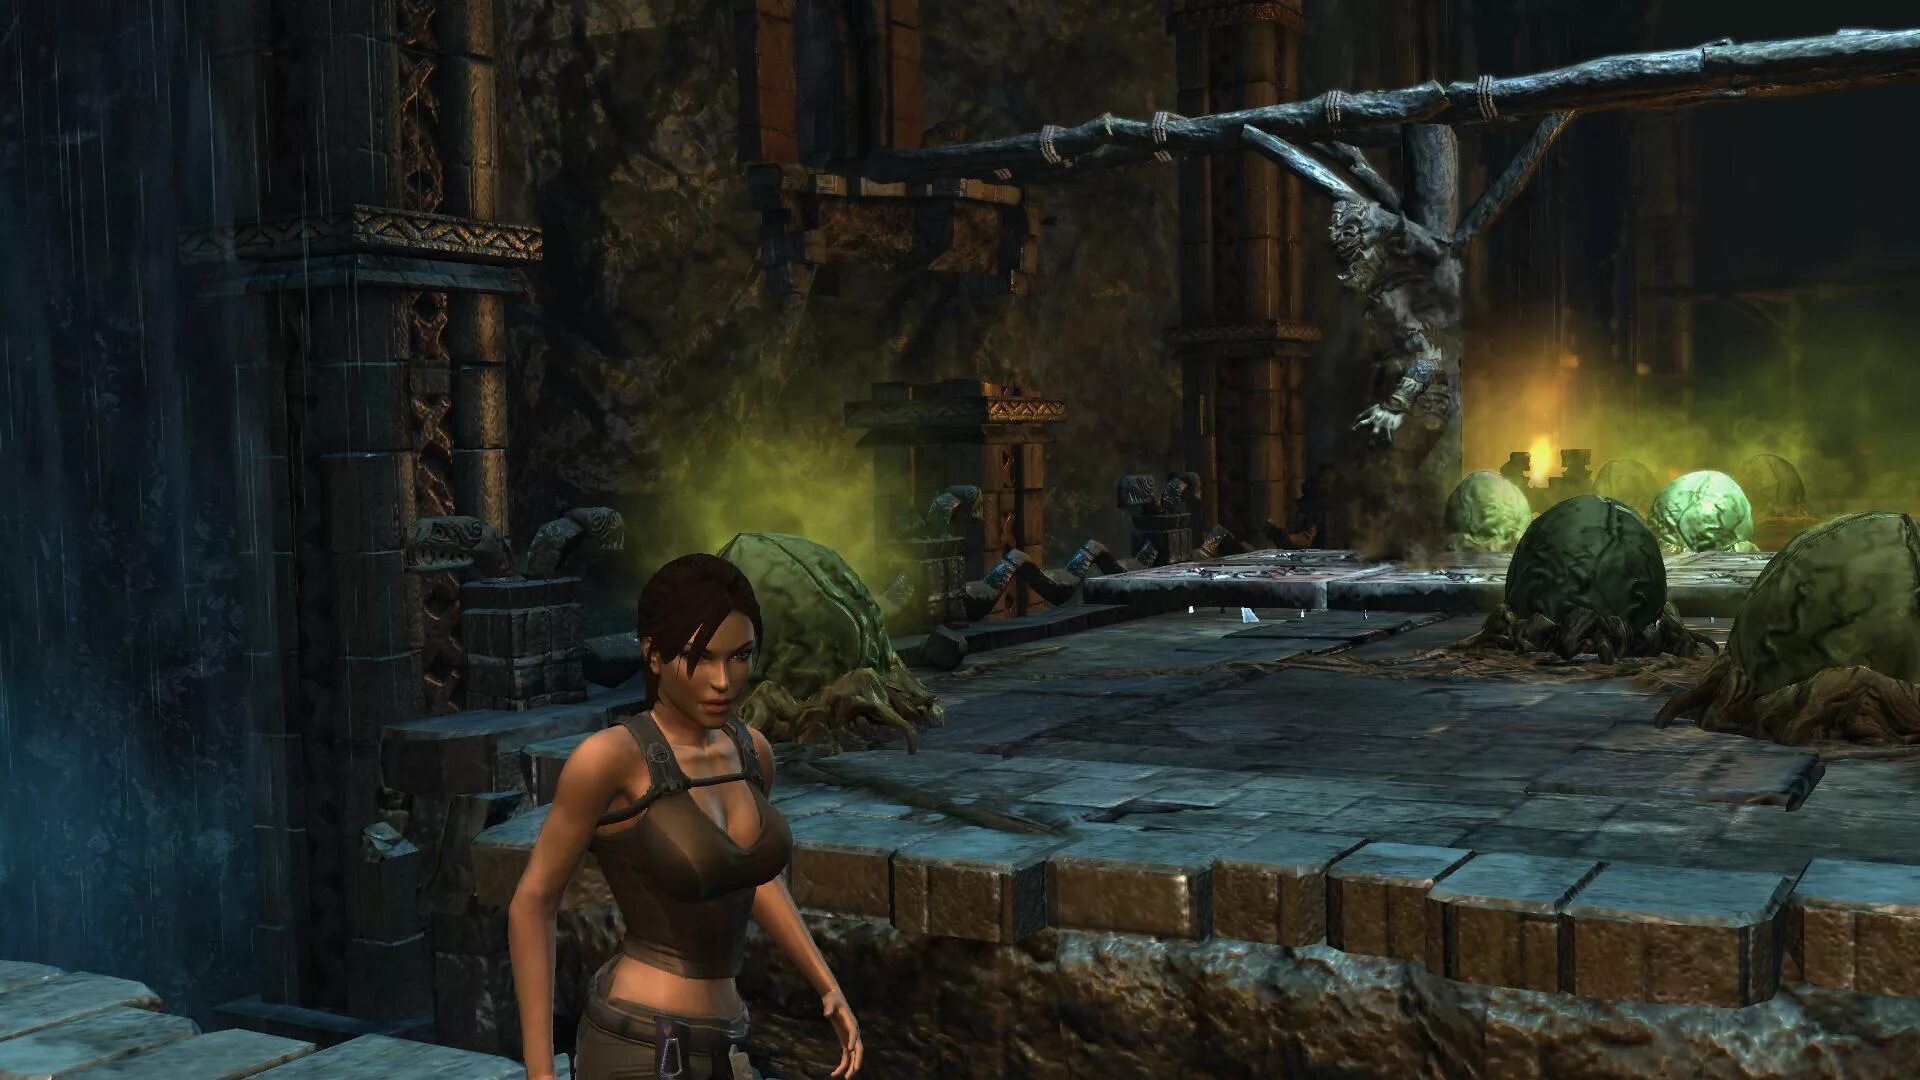 Lara croft island. Lara Croft and the Guardian of Light (2010).